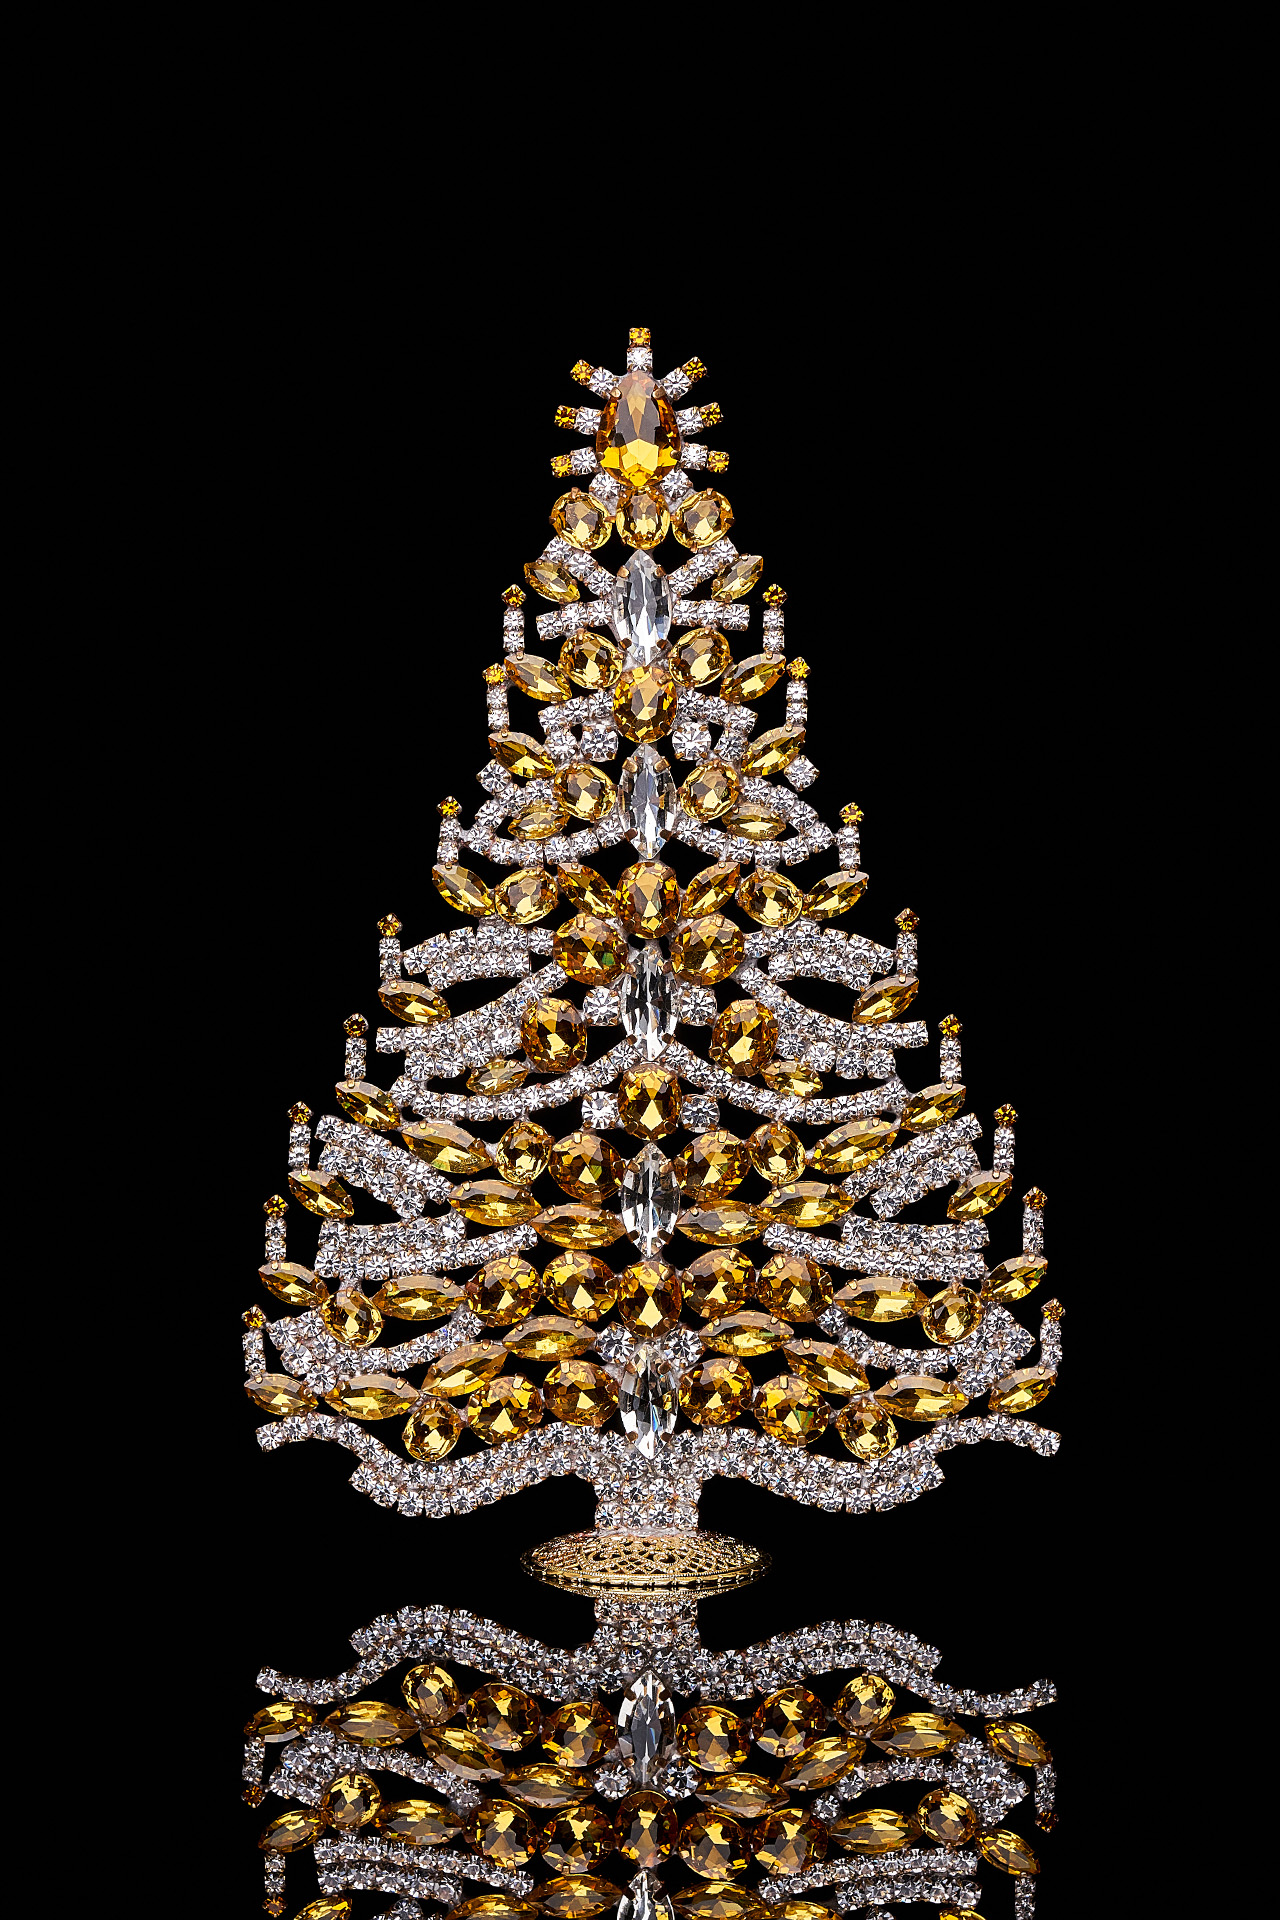 Handmade tabletop Christmas tree with yellow rhinestones